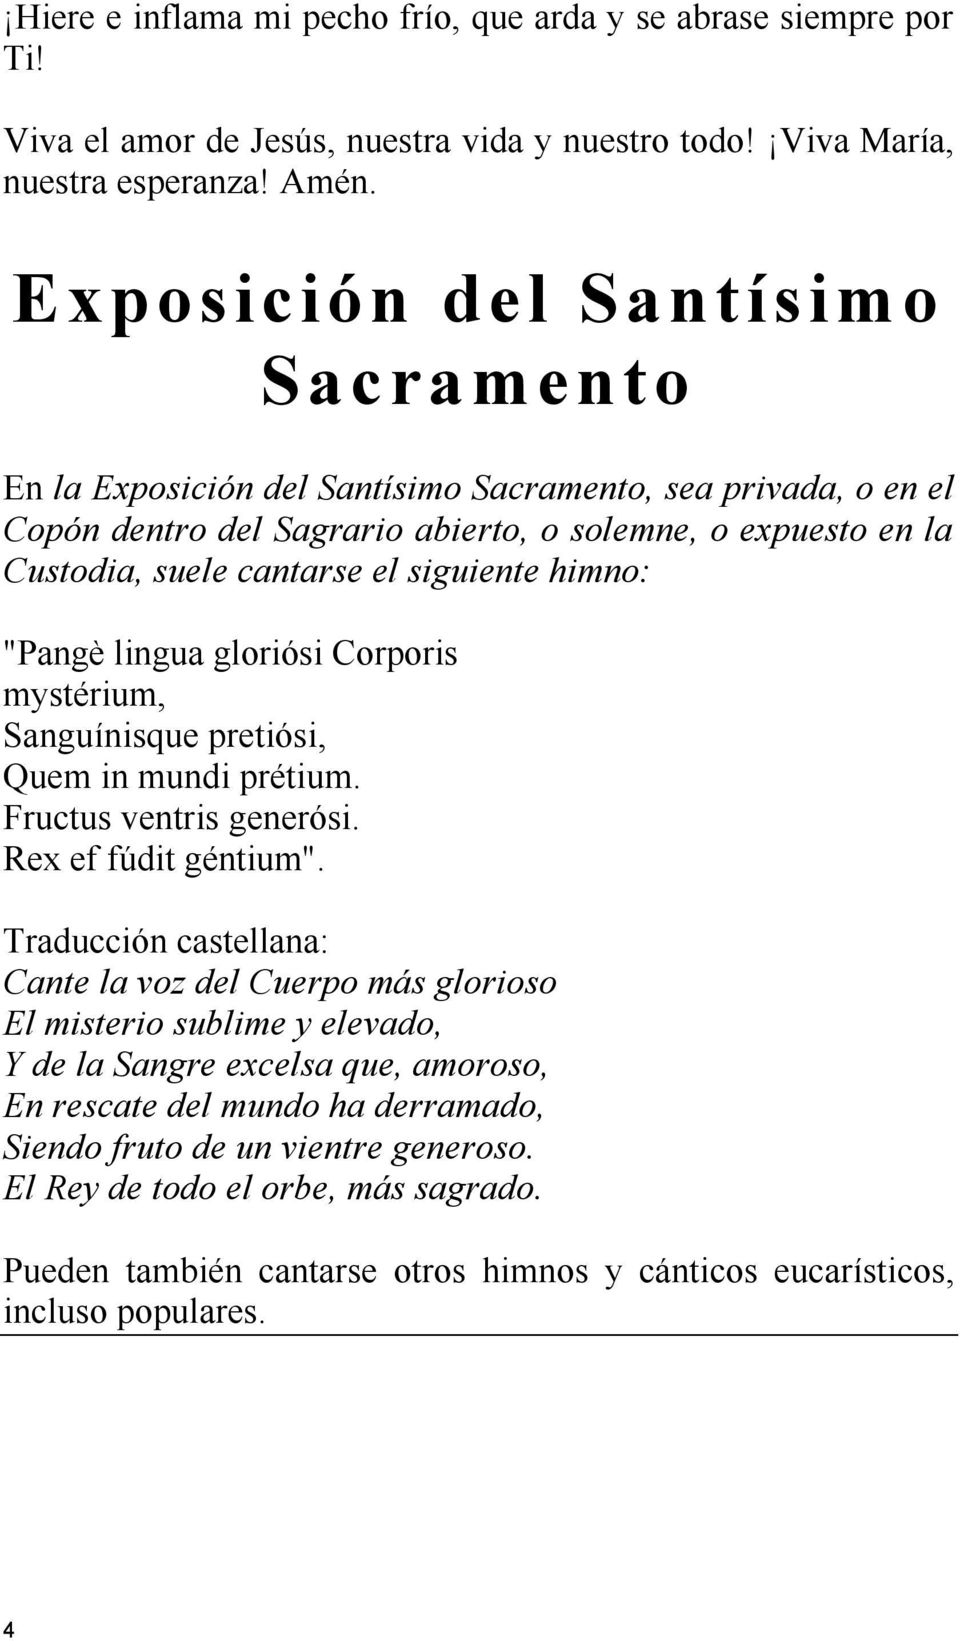 siguiente himno: "Pangè lingua gloriósi Corporis mystérium, Sanguínisque pretiósi, Quem in mundi prétium. Fructus ventris generósi. Rex ef fúdit géntium".